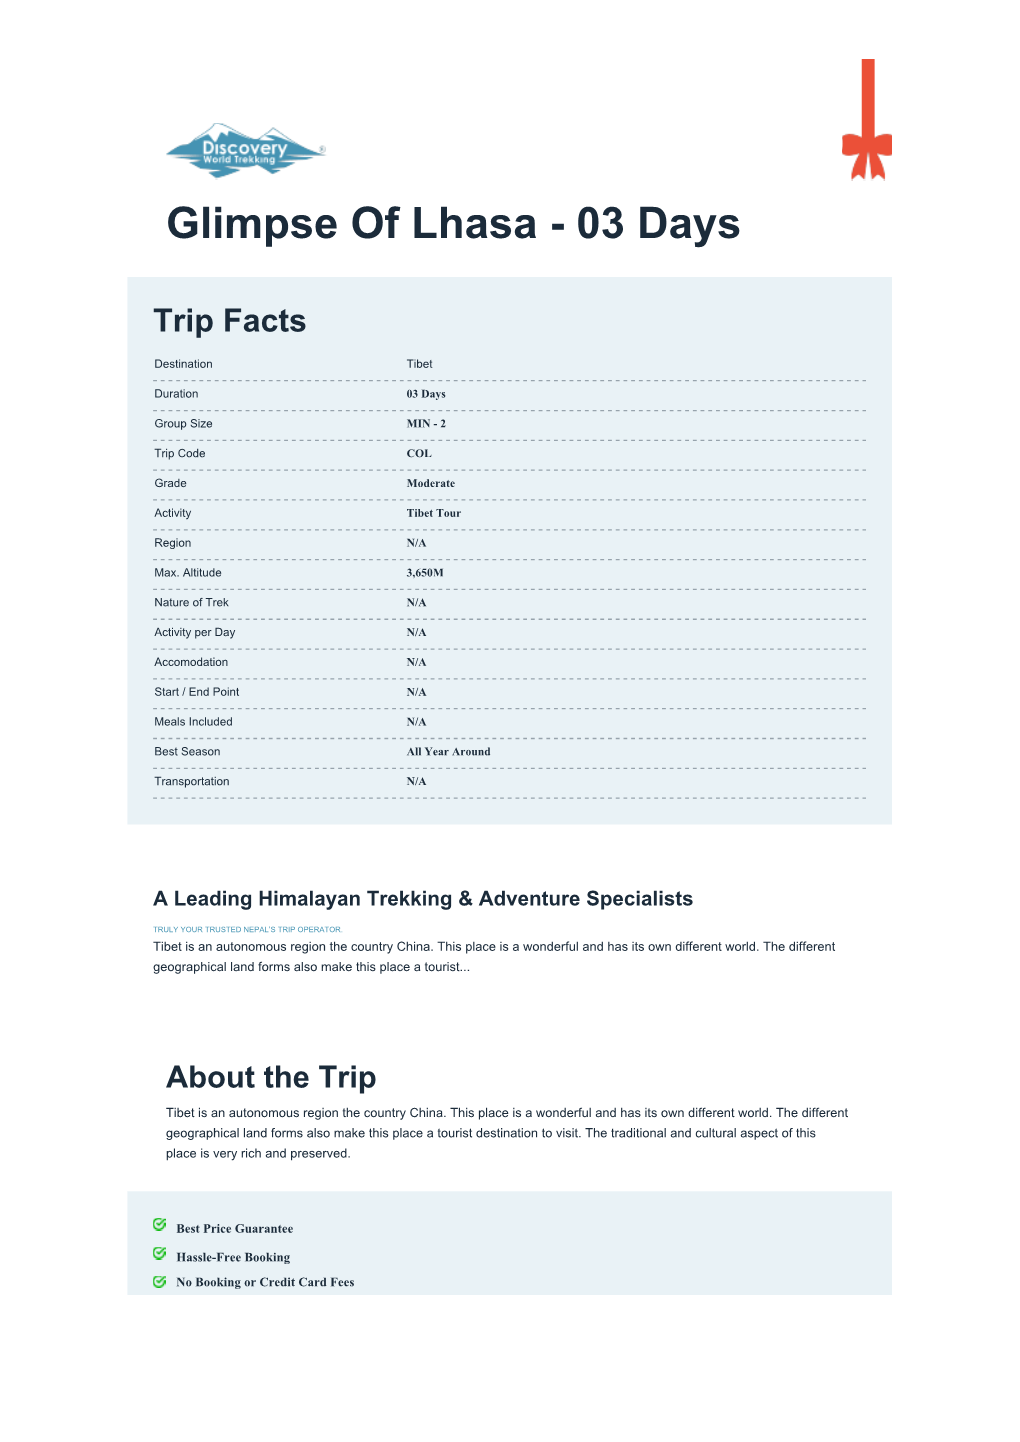 Glimpse of Lhasa - 03 Days